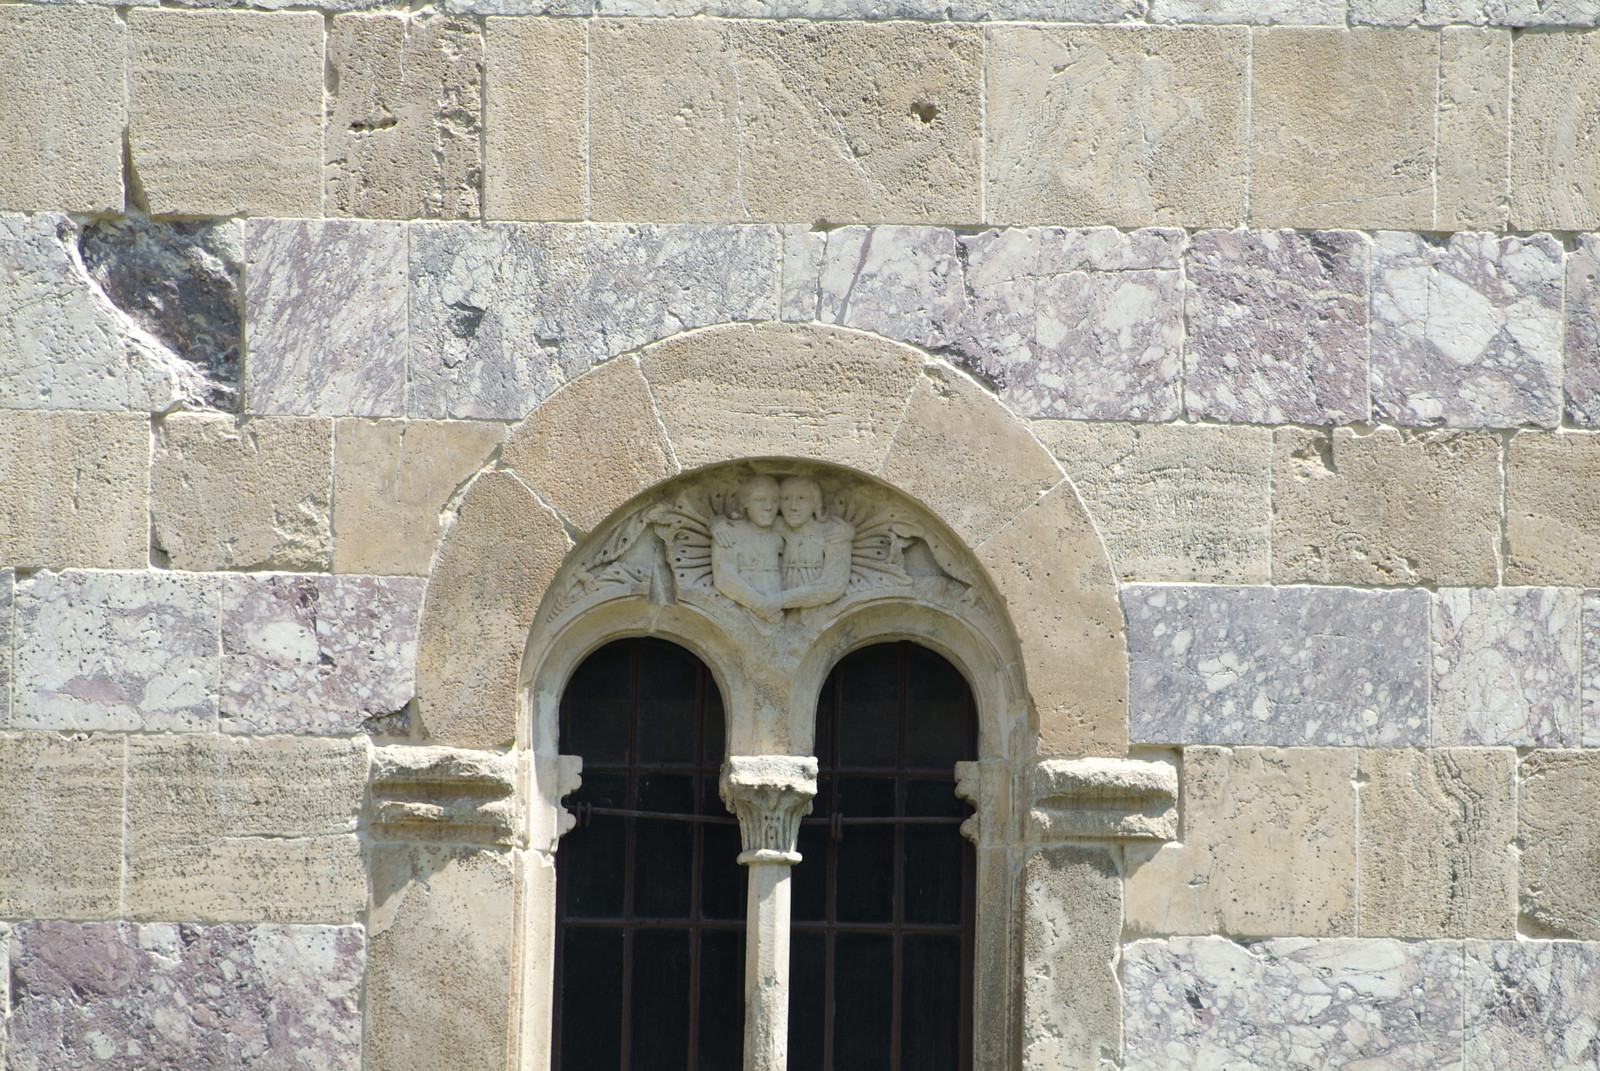 Church Window 2